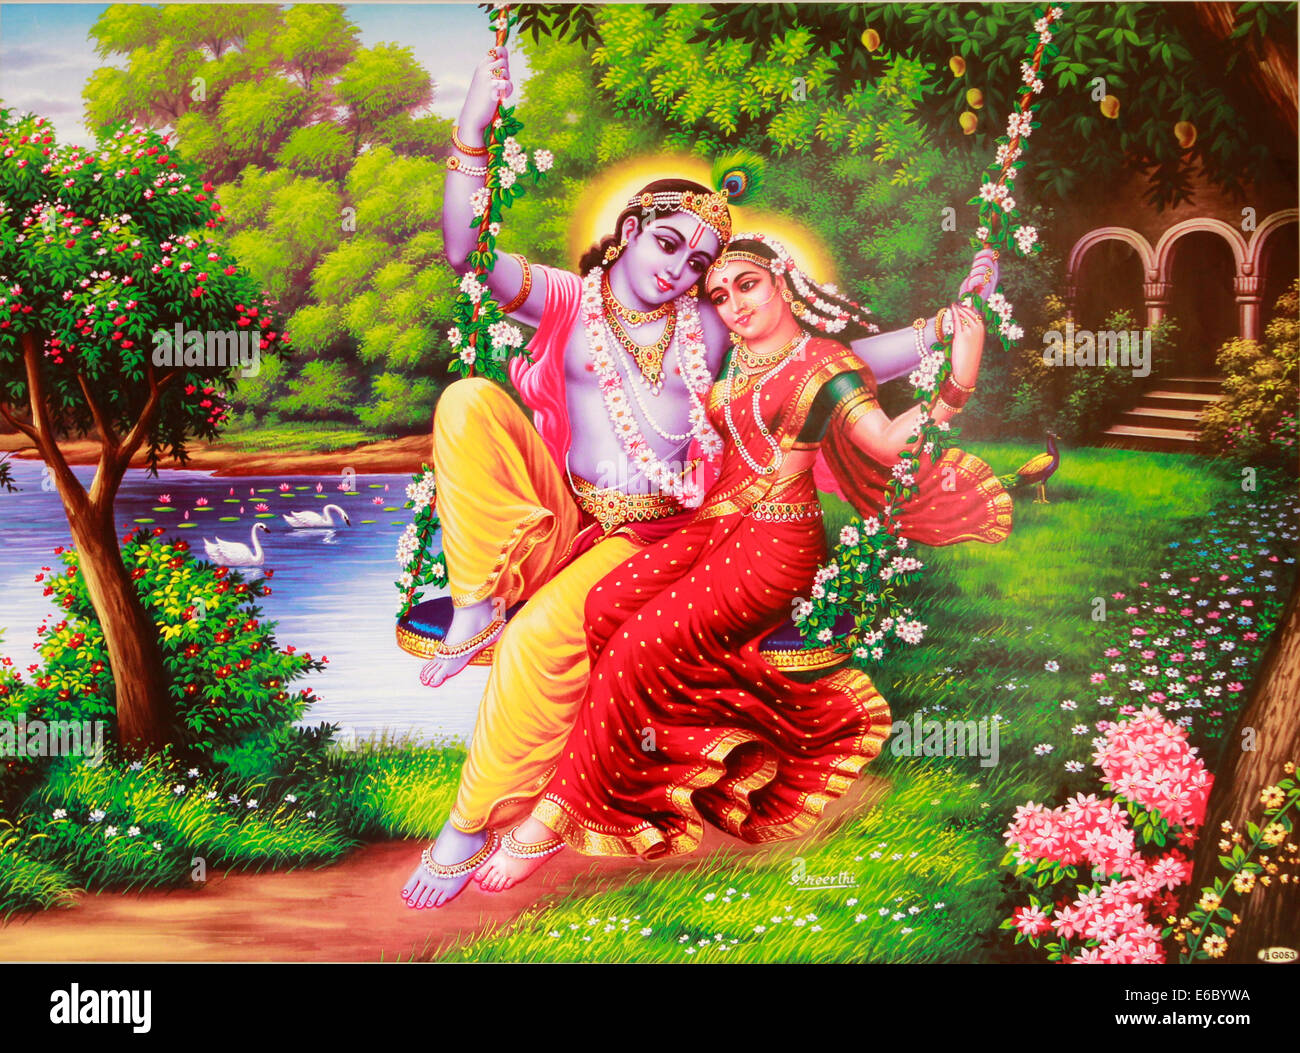 Painting Of Hindu God Krishna And Radha On A Swing Stock Photo